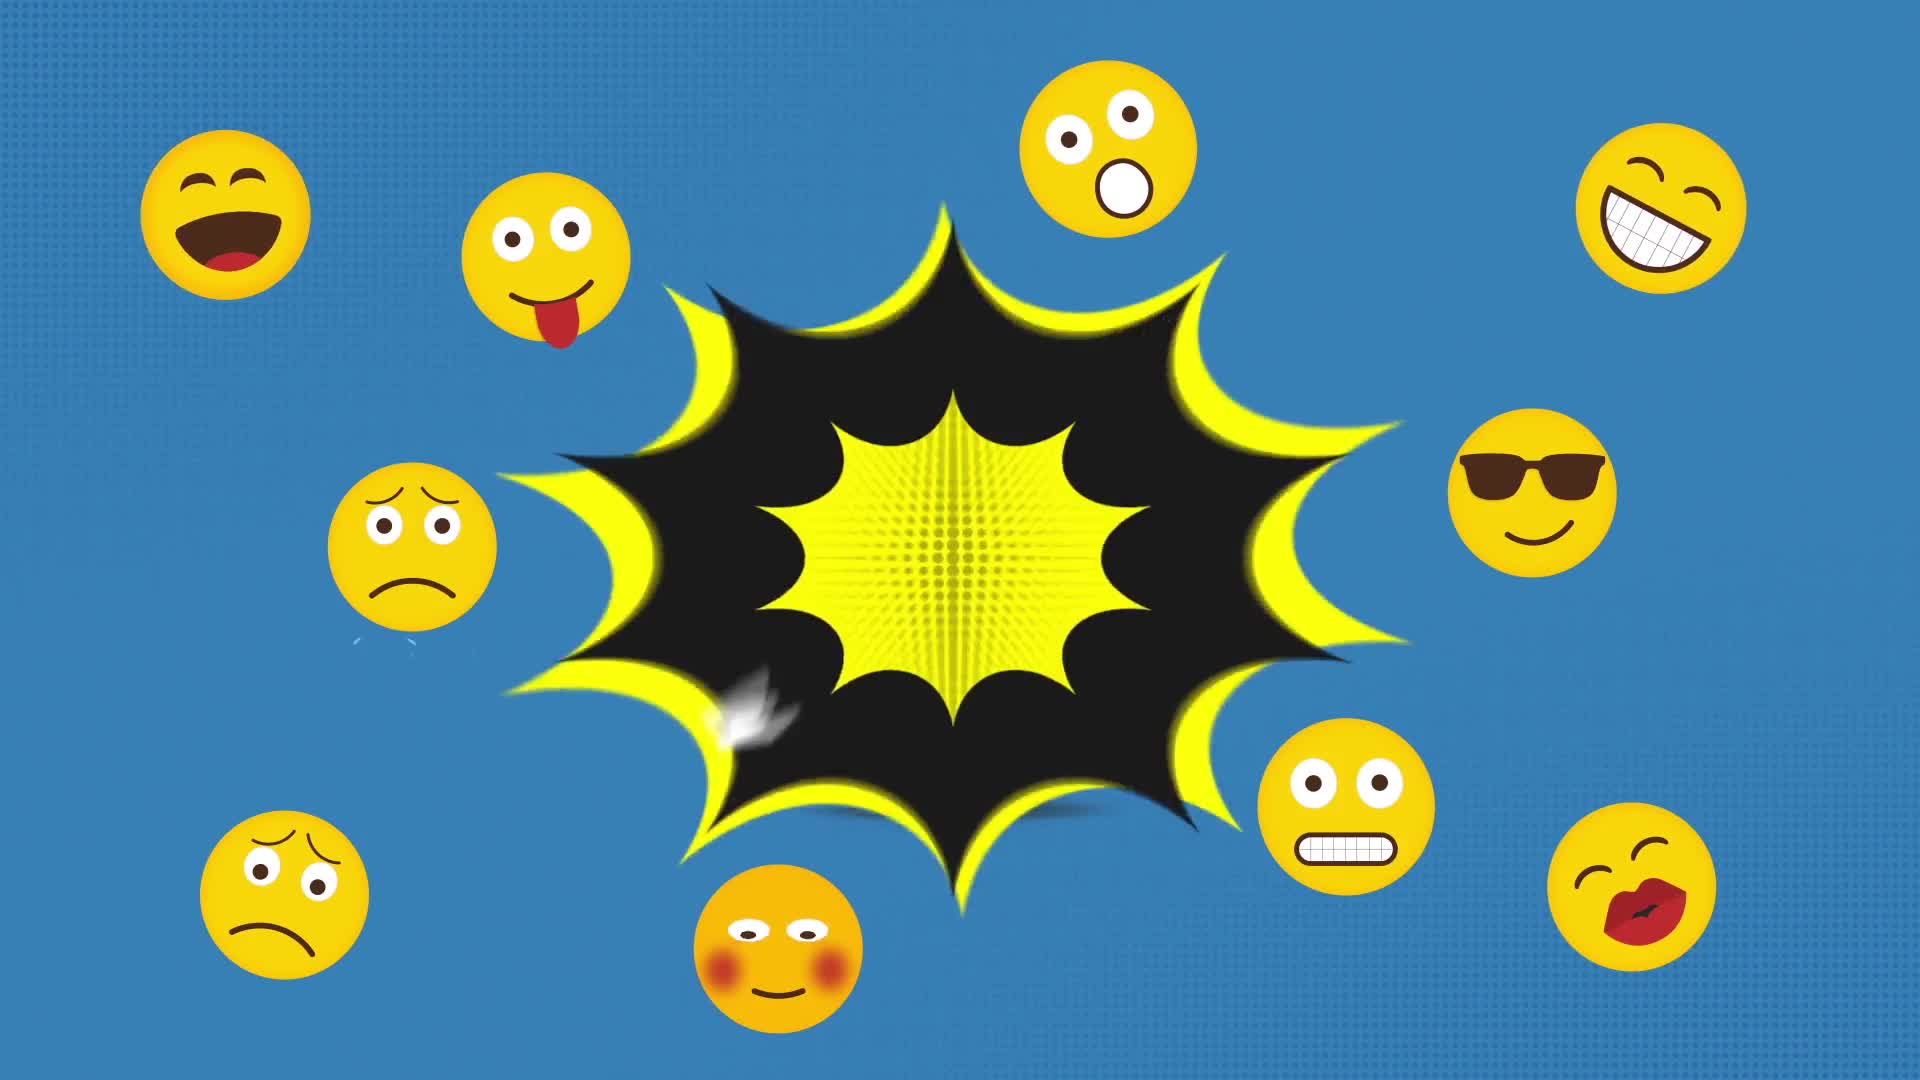 Comic Titles Speech Bubbles Emoji Stickers Flash FX Graphic Pack Videohive 22645319 Premiere Pro Image 1